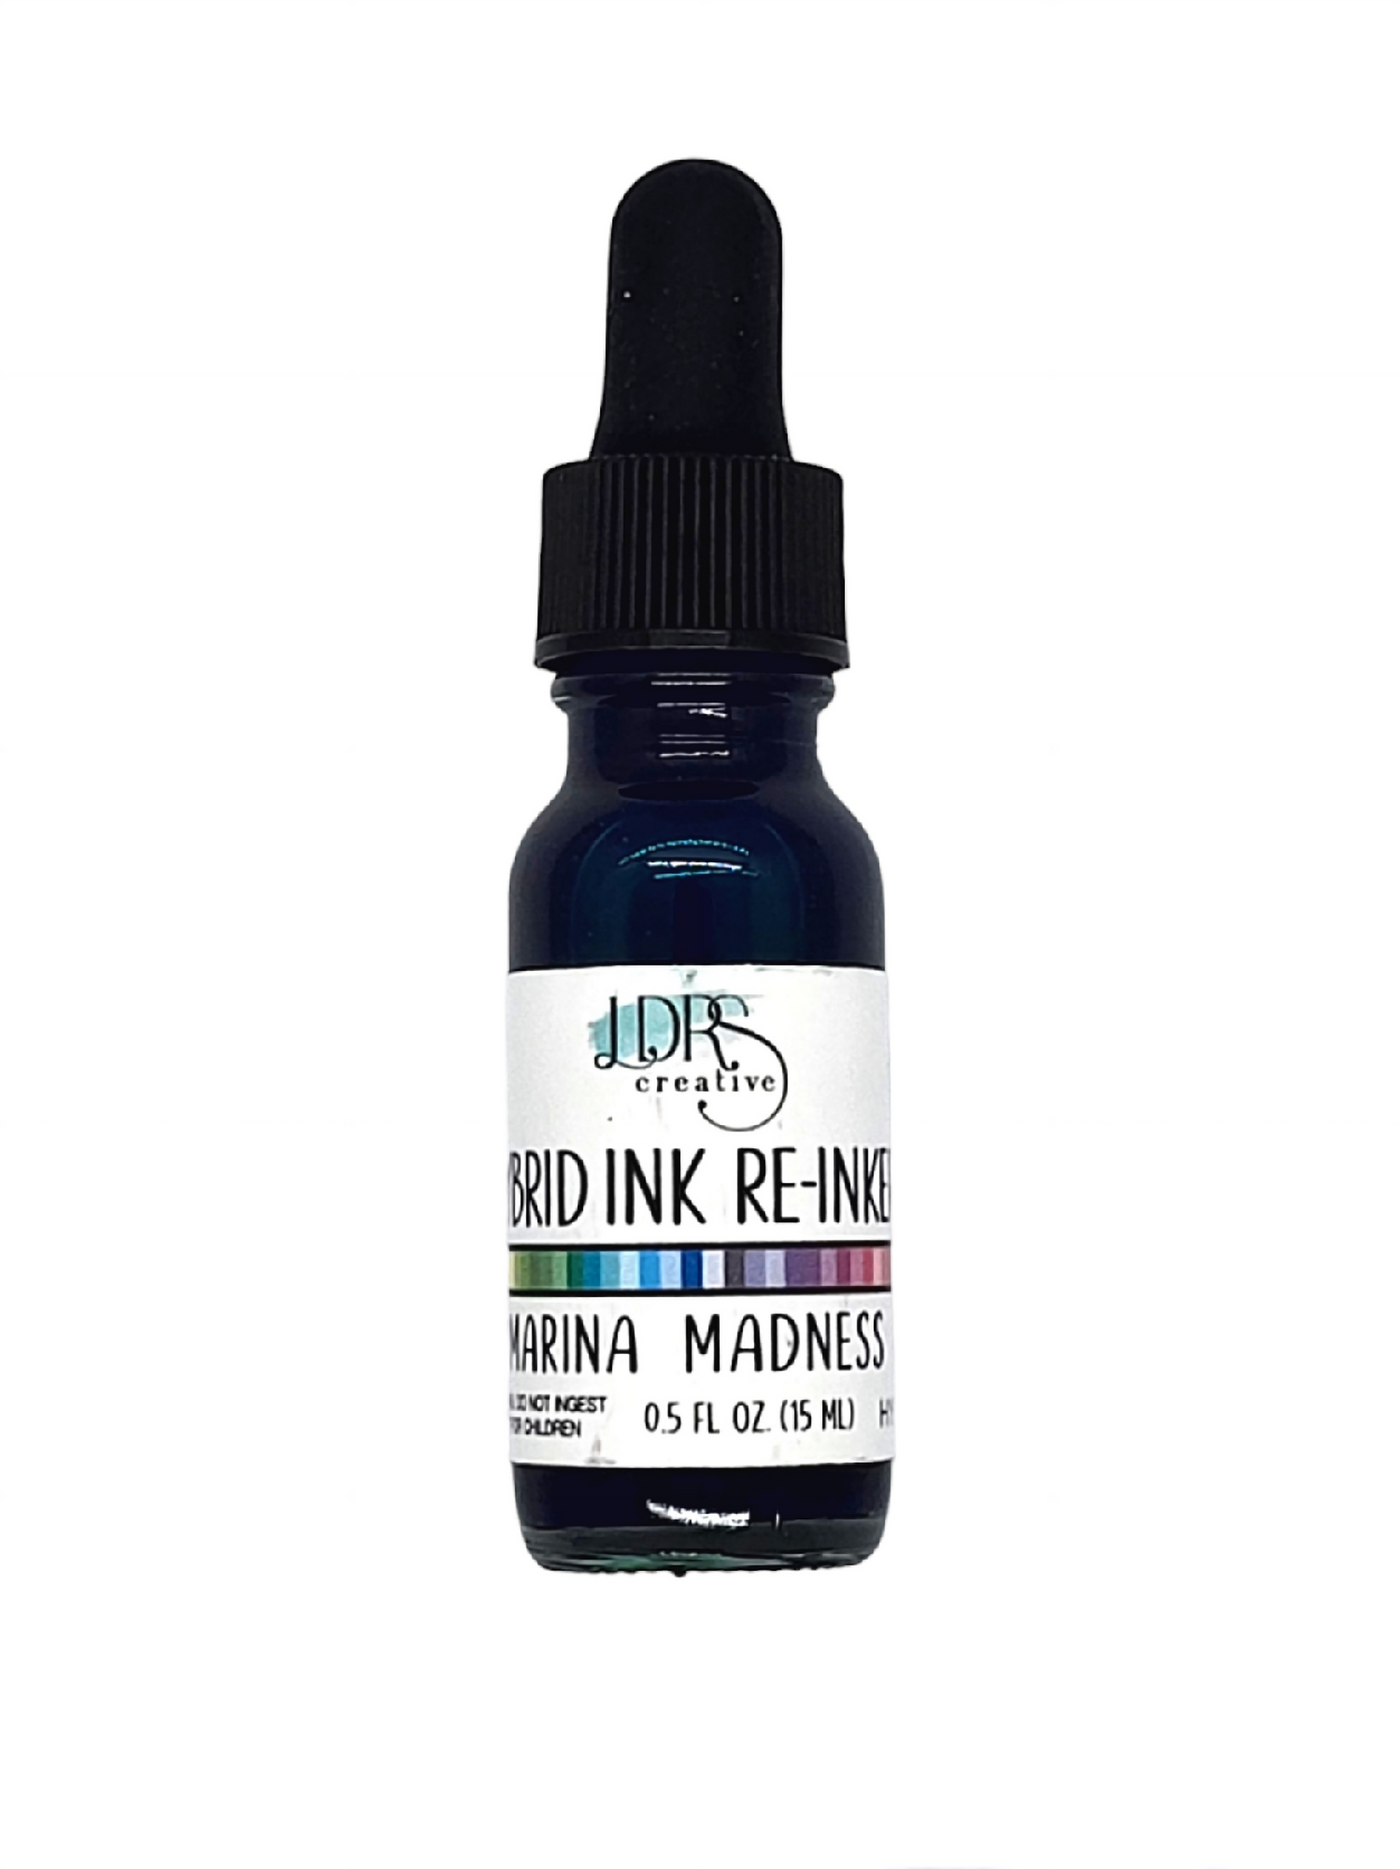 Marina Madness Hybrid Ink Re-Inker